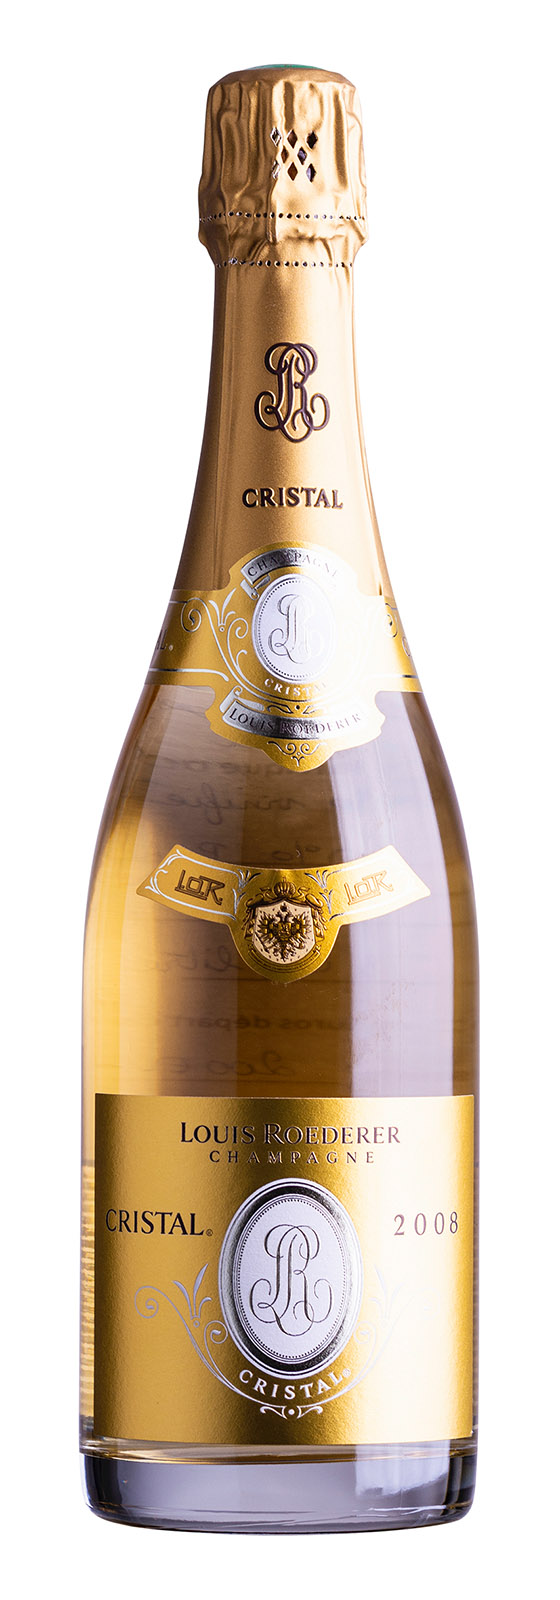 Champagne AOC Cristal Vintage 2008